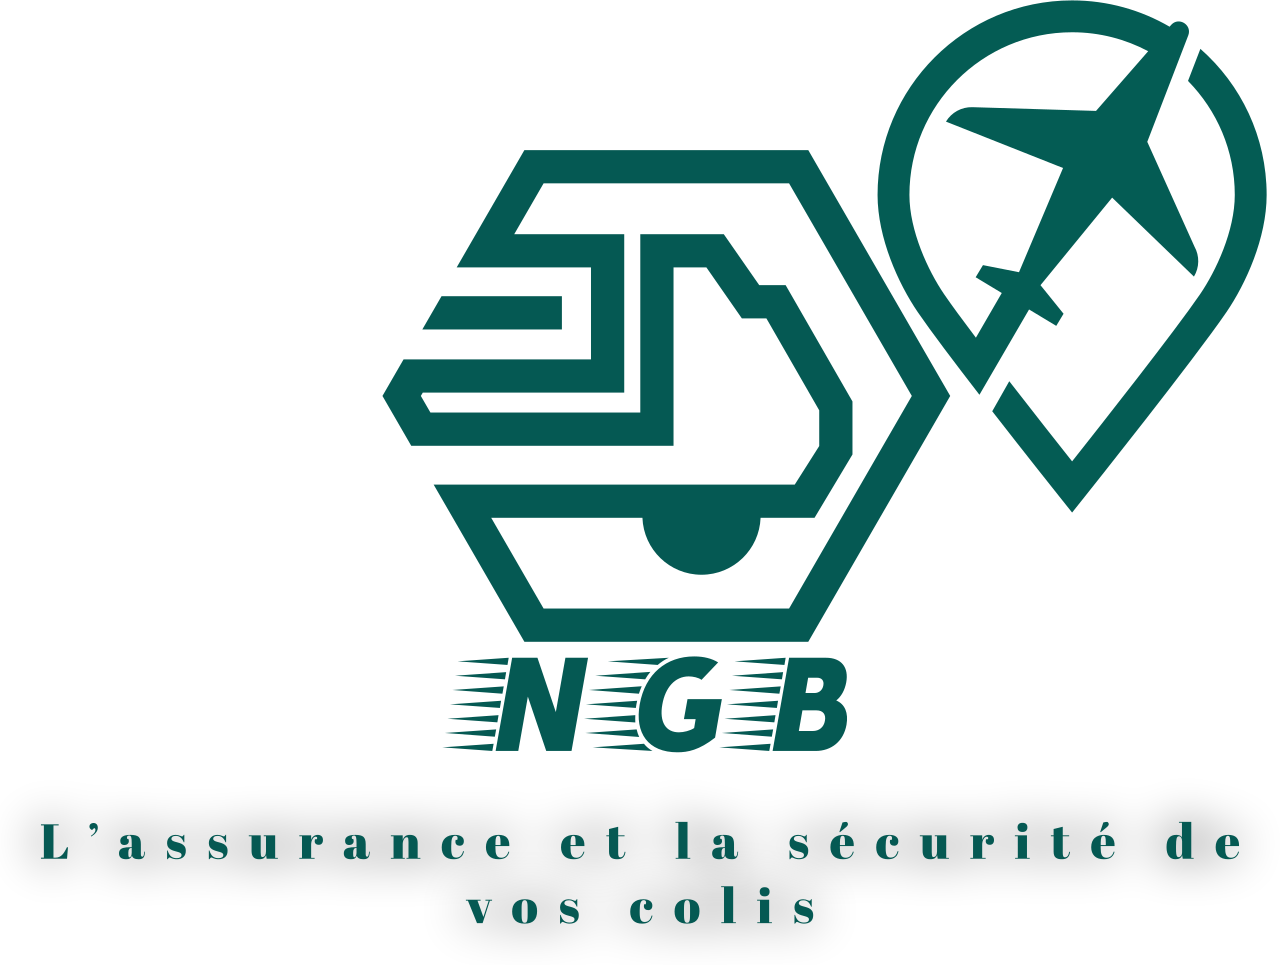 NGB's logo